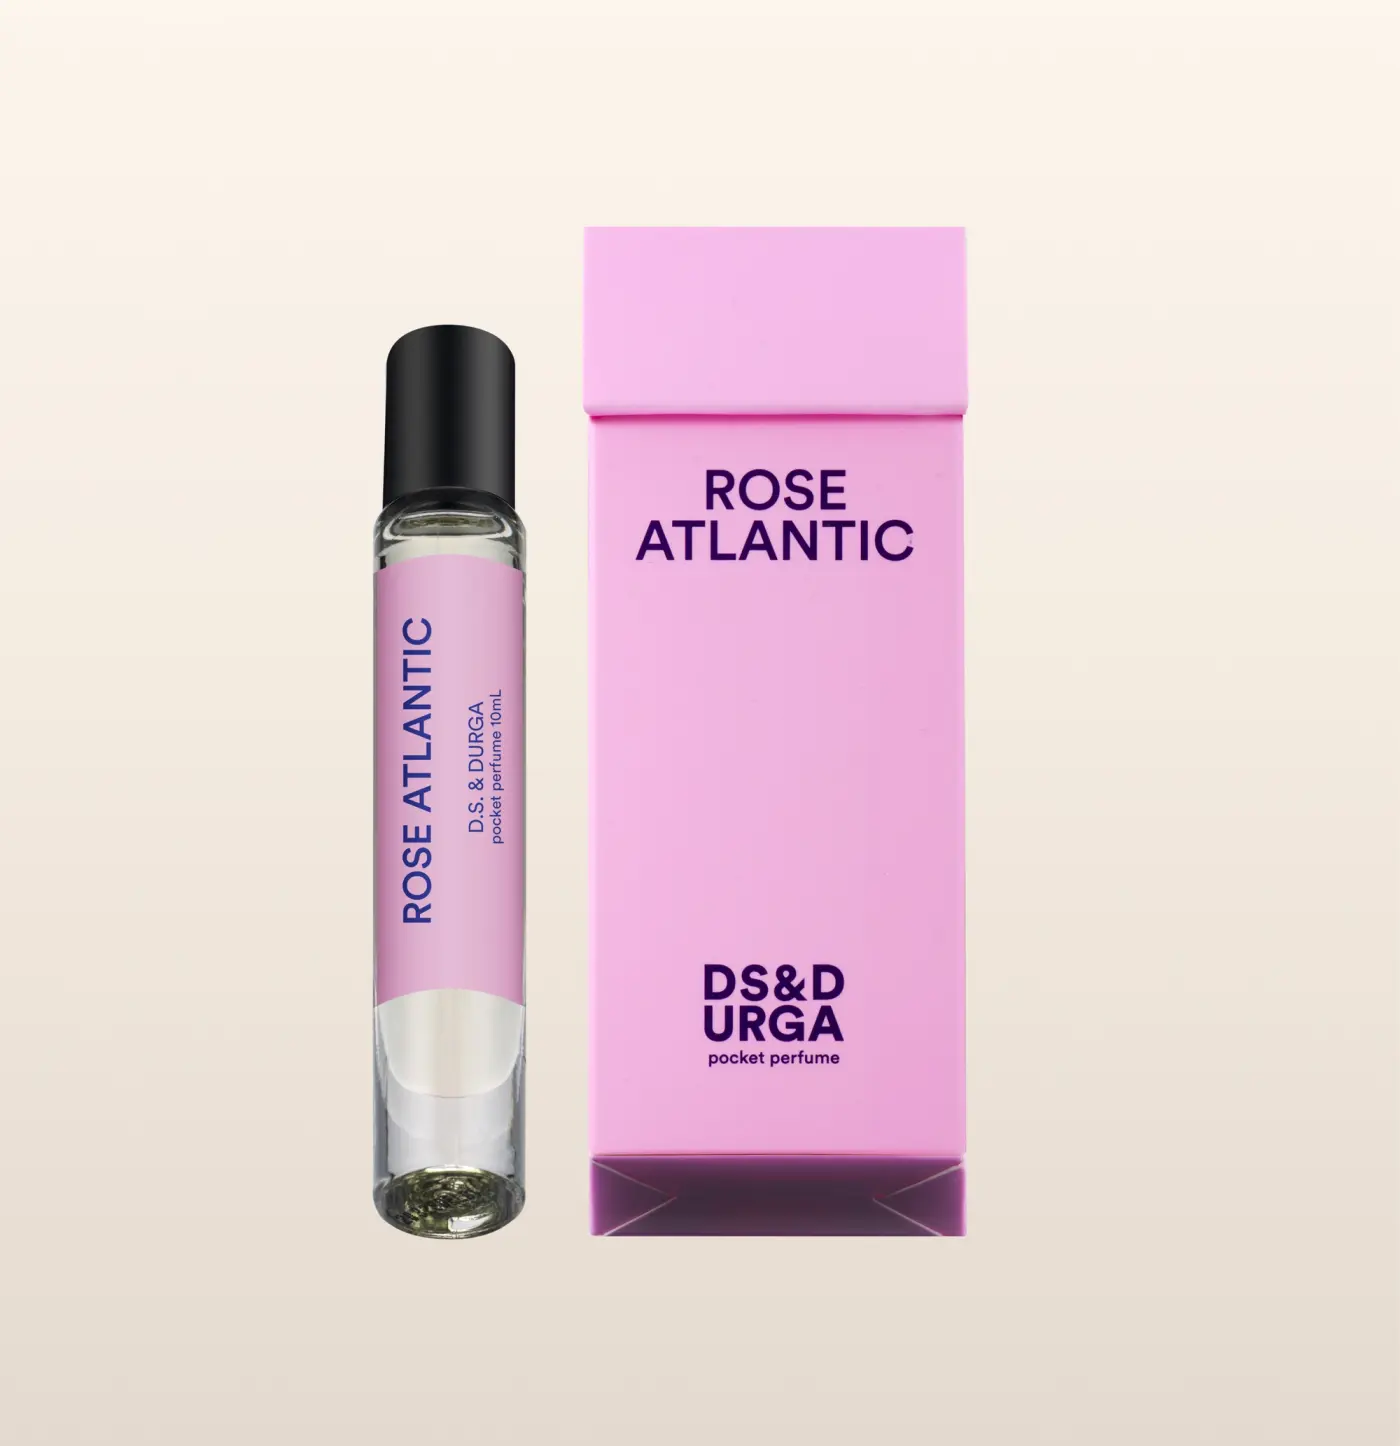 Rose Atlantic Pocket Perfume by D.S. & Durga